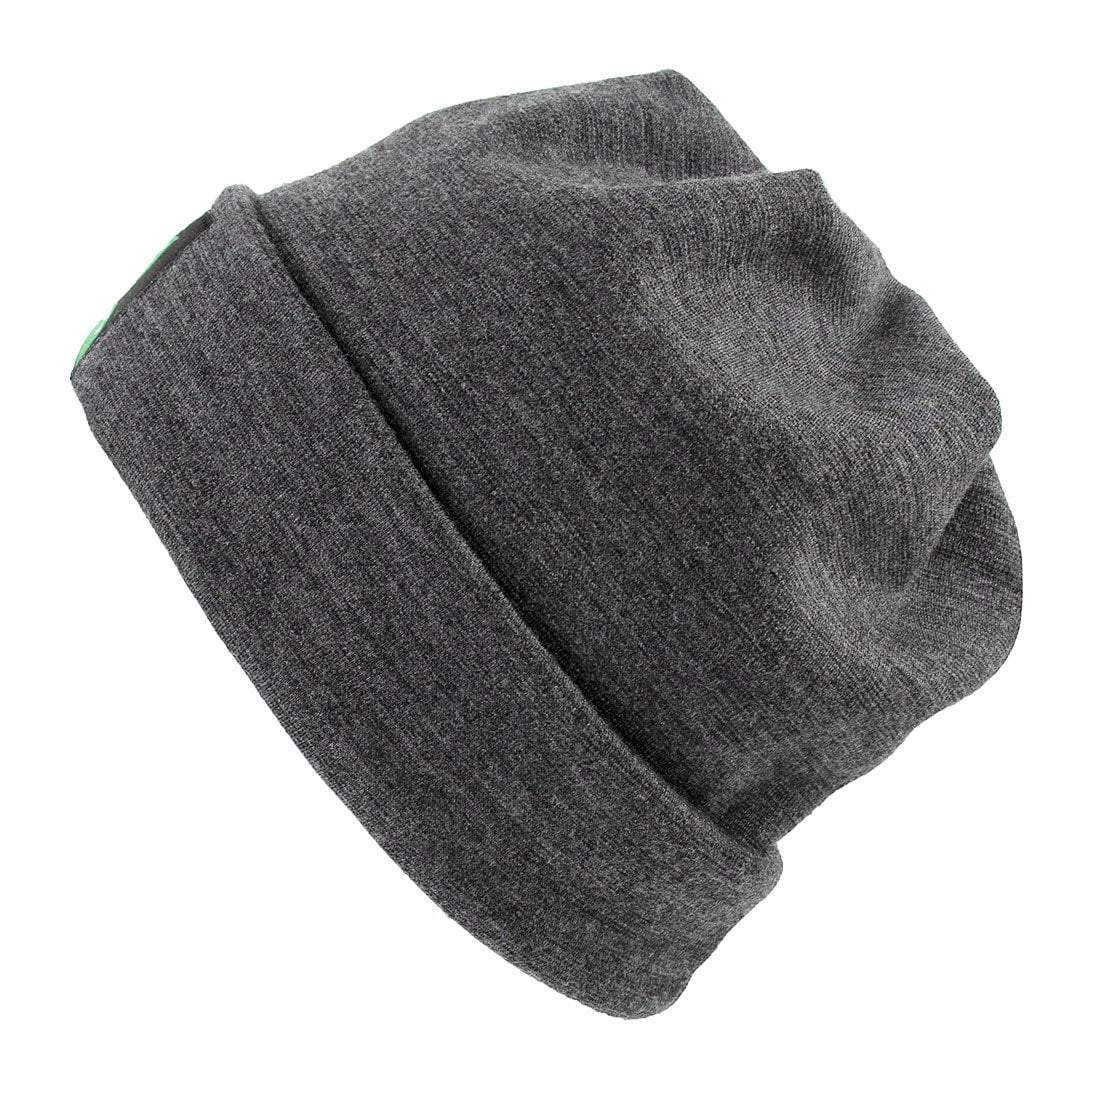 Merino Wool Stocking Cap (Unisex)-Made in Ely, MN. Large/X-Large / Heather Gray